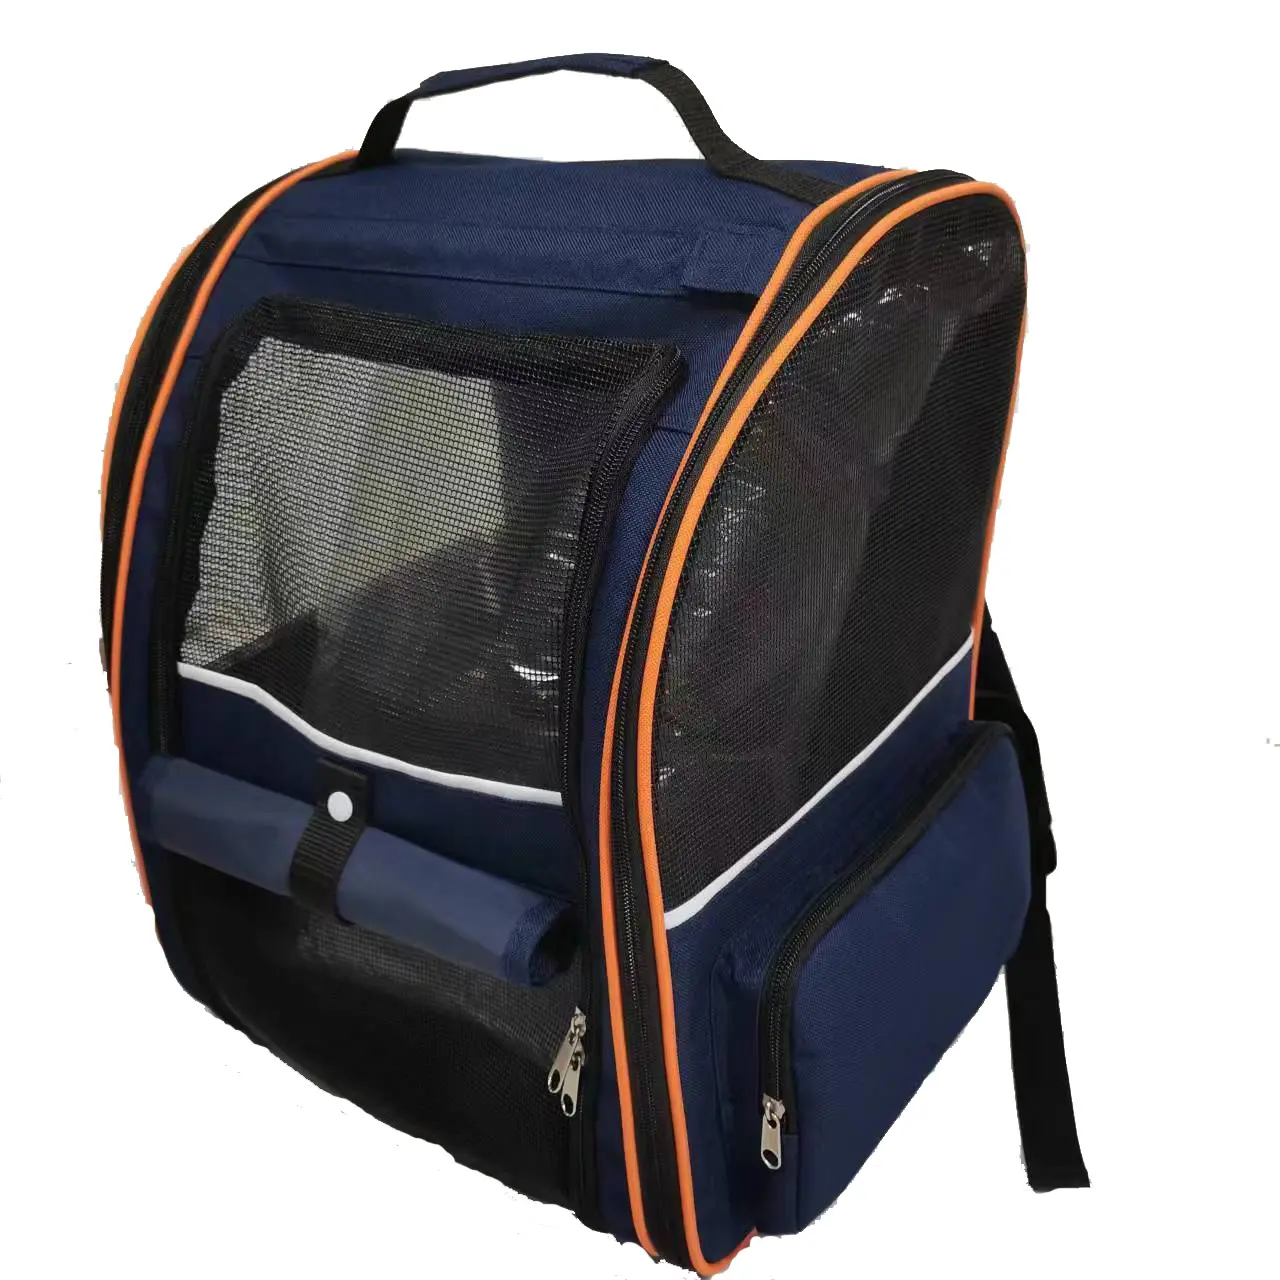 Polyester pet katlanabilir kedi taşıyıcı çanta köpek kedi evcil hayvan taşıyıcı sırt çantası evcil hayvan taşıyıcı s & seyahat ürünleri kedi taşıma seyahat çantası